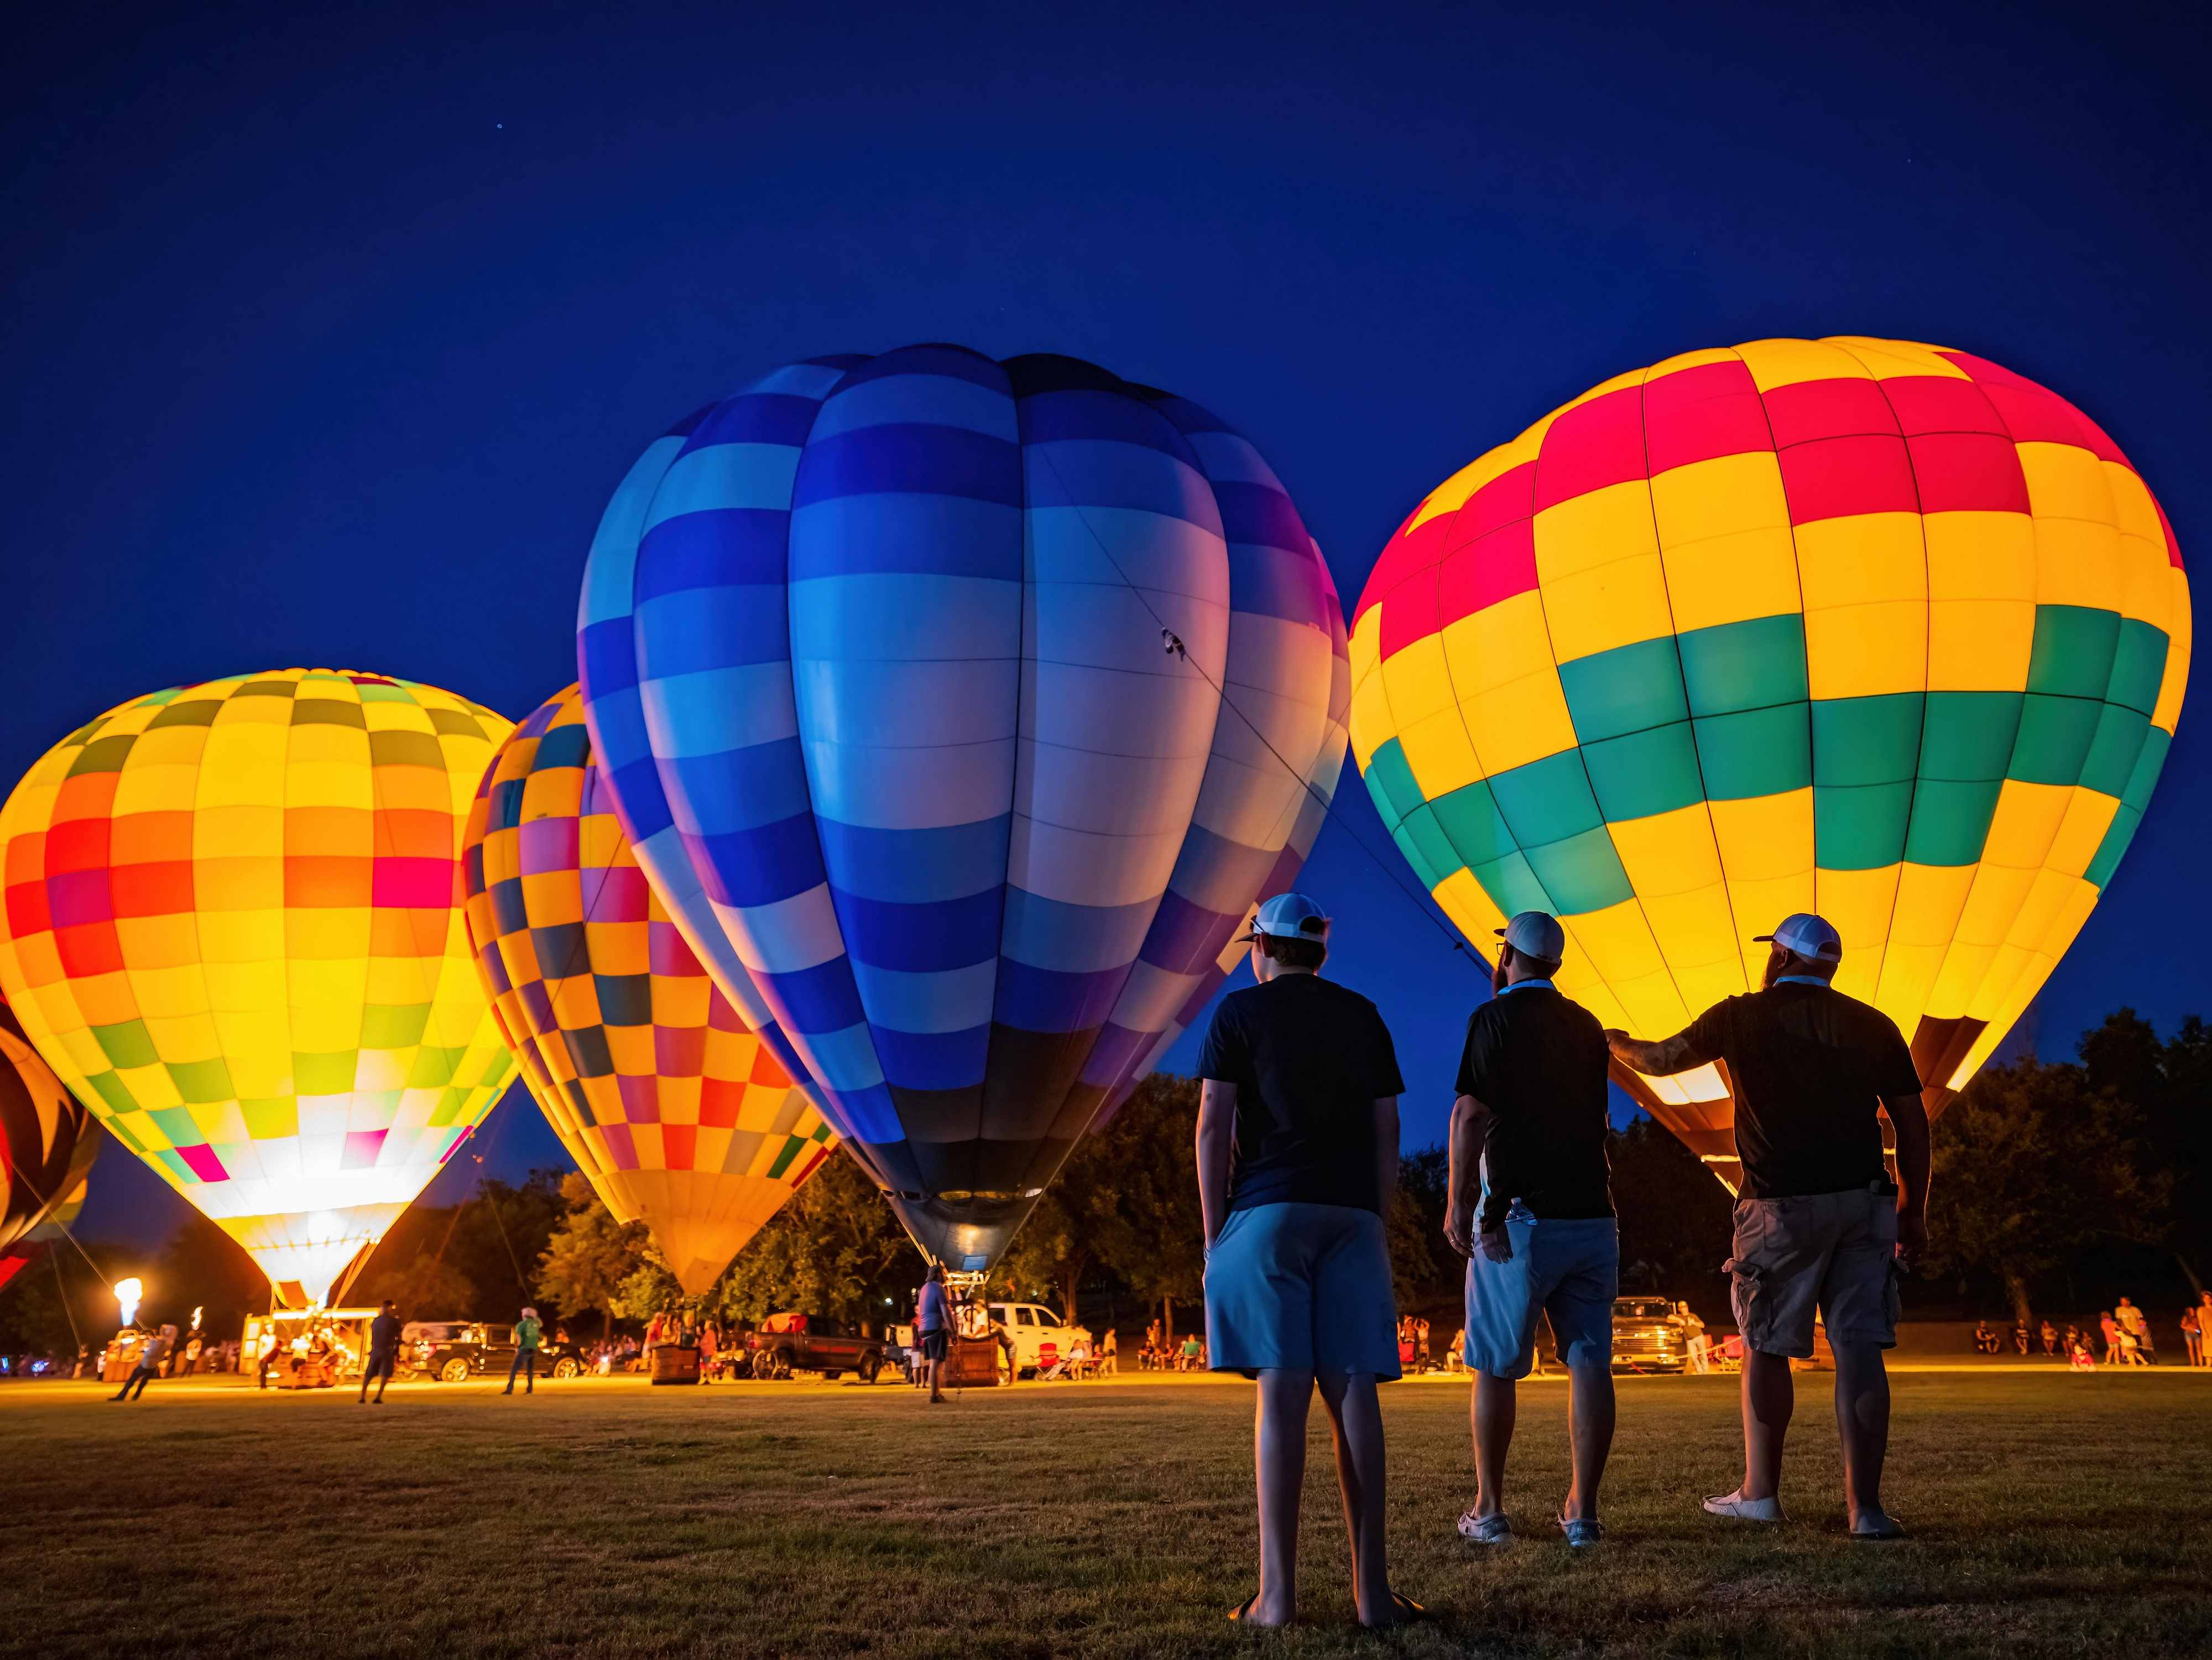 Night view of the Annual Firelake Fireflight Balloon Festival 